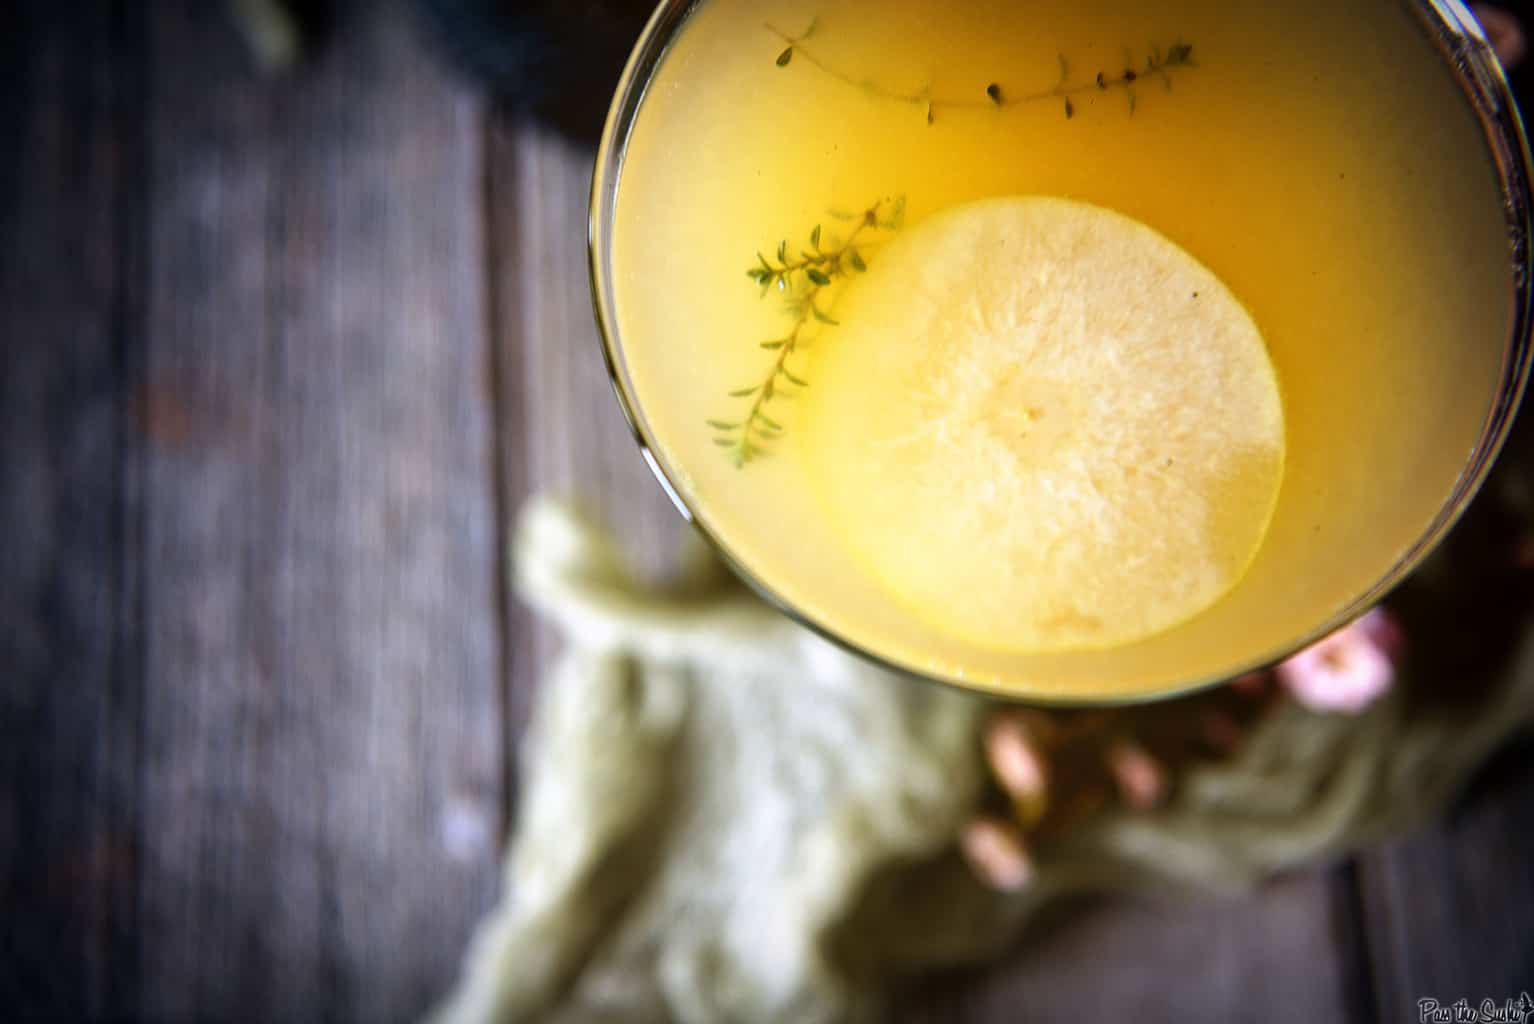 Pear Martini Cocktail Recipe | Kita Roberts PassTheSushi